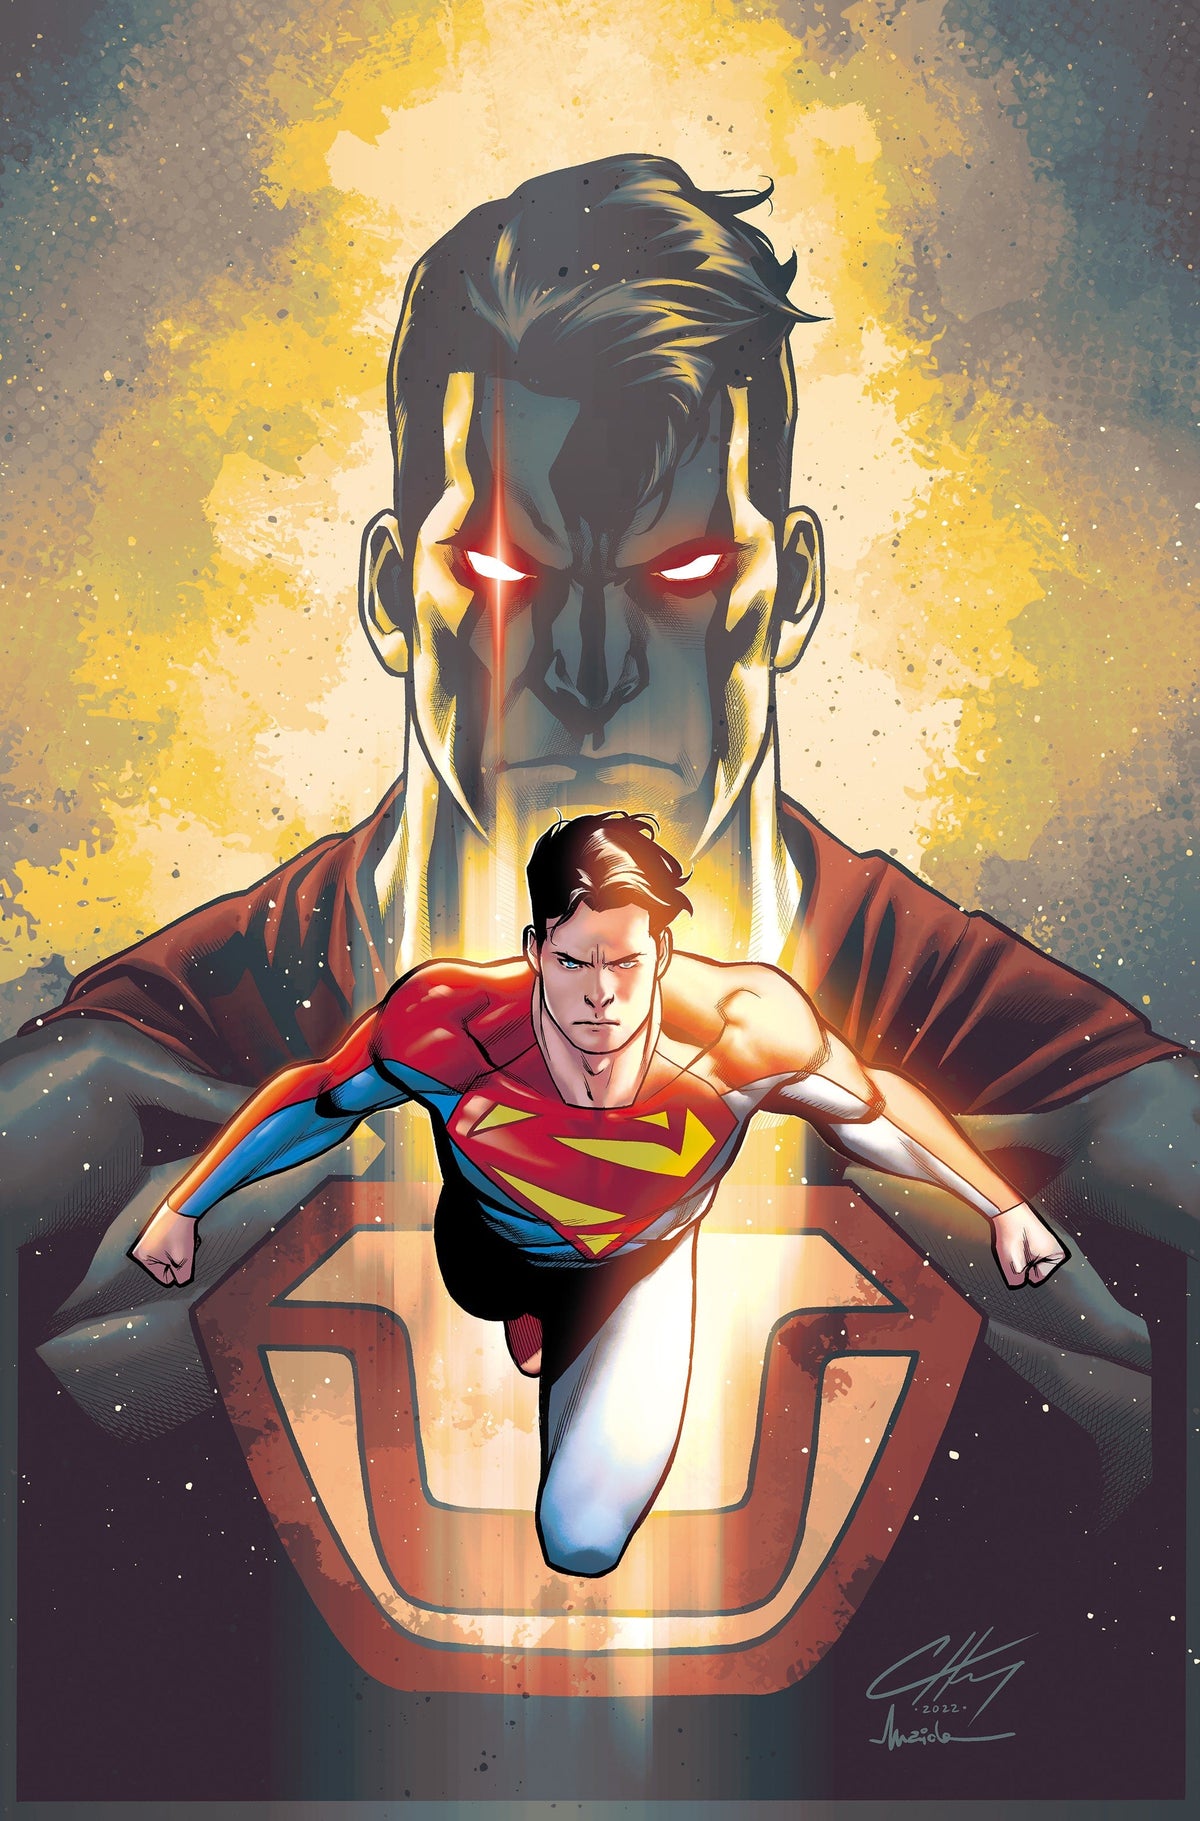 ADVENTURES OF SUPERMAN JON KENT #2 (OF 6) CVR A CLAYTON HENRY - Third Eye